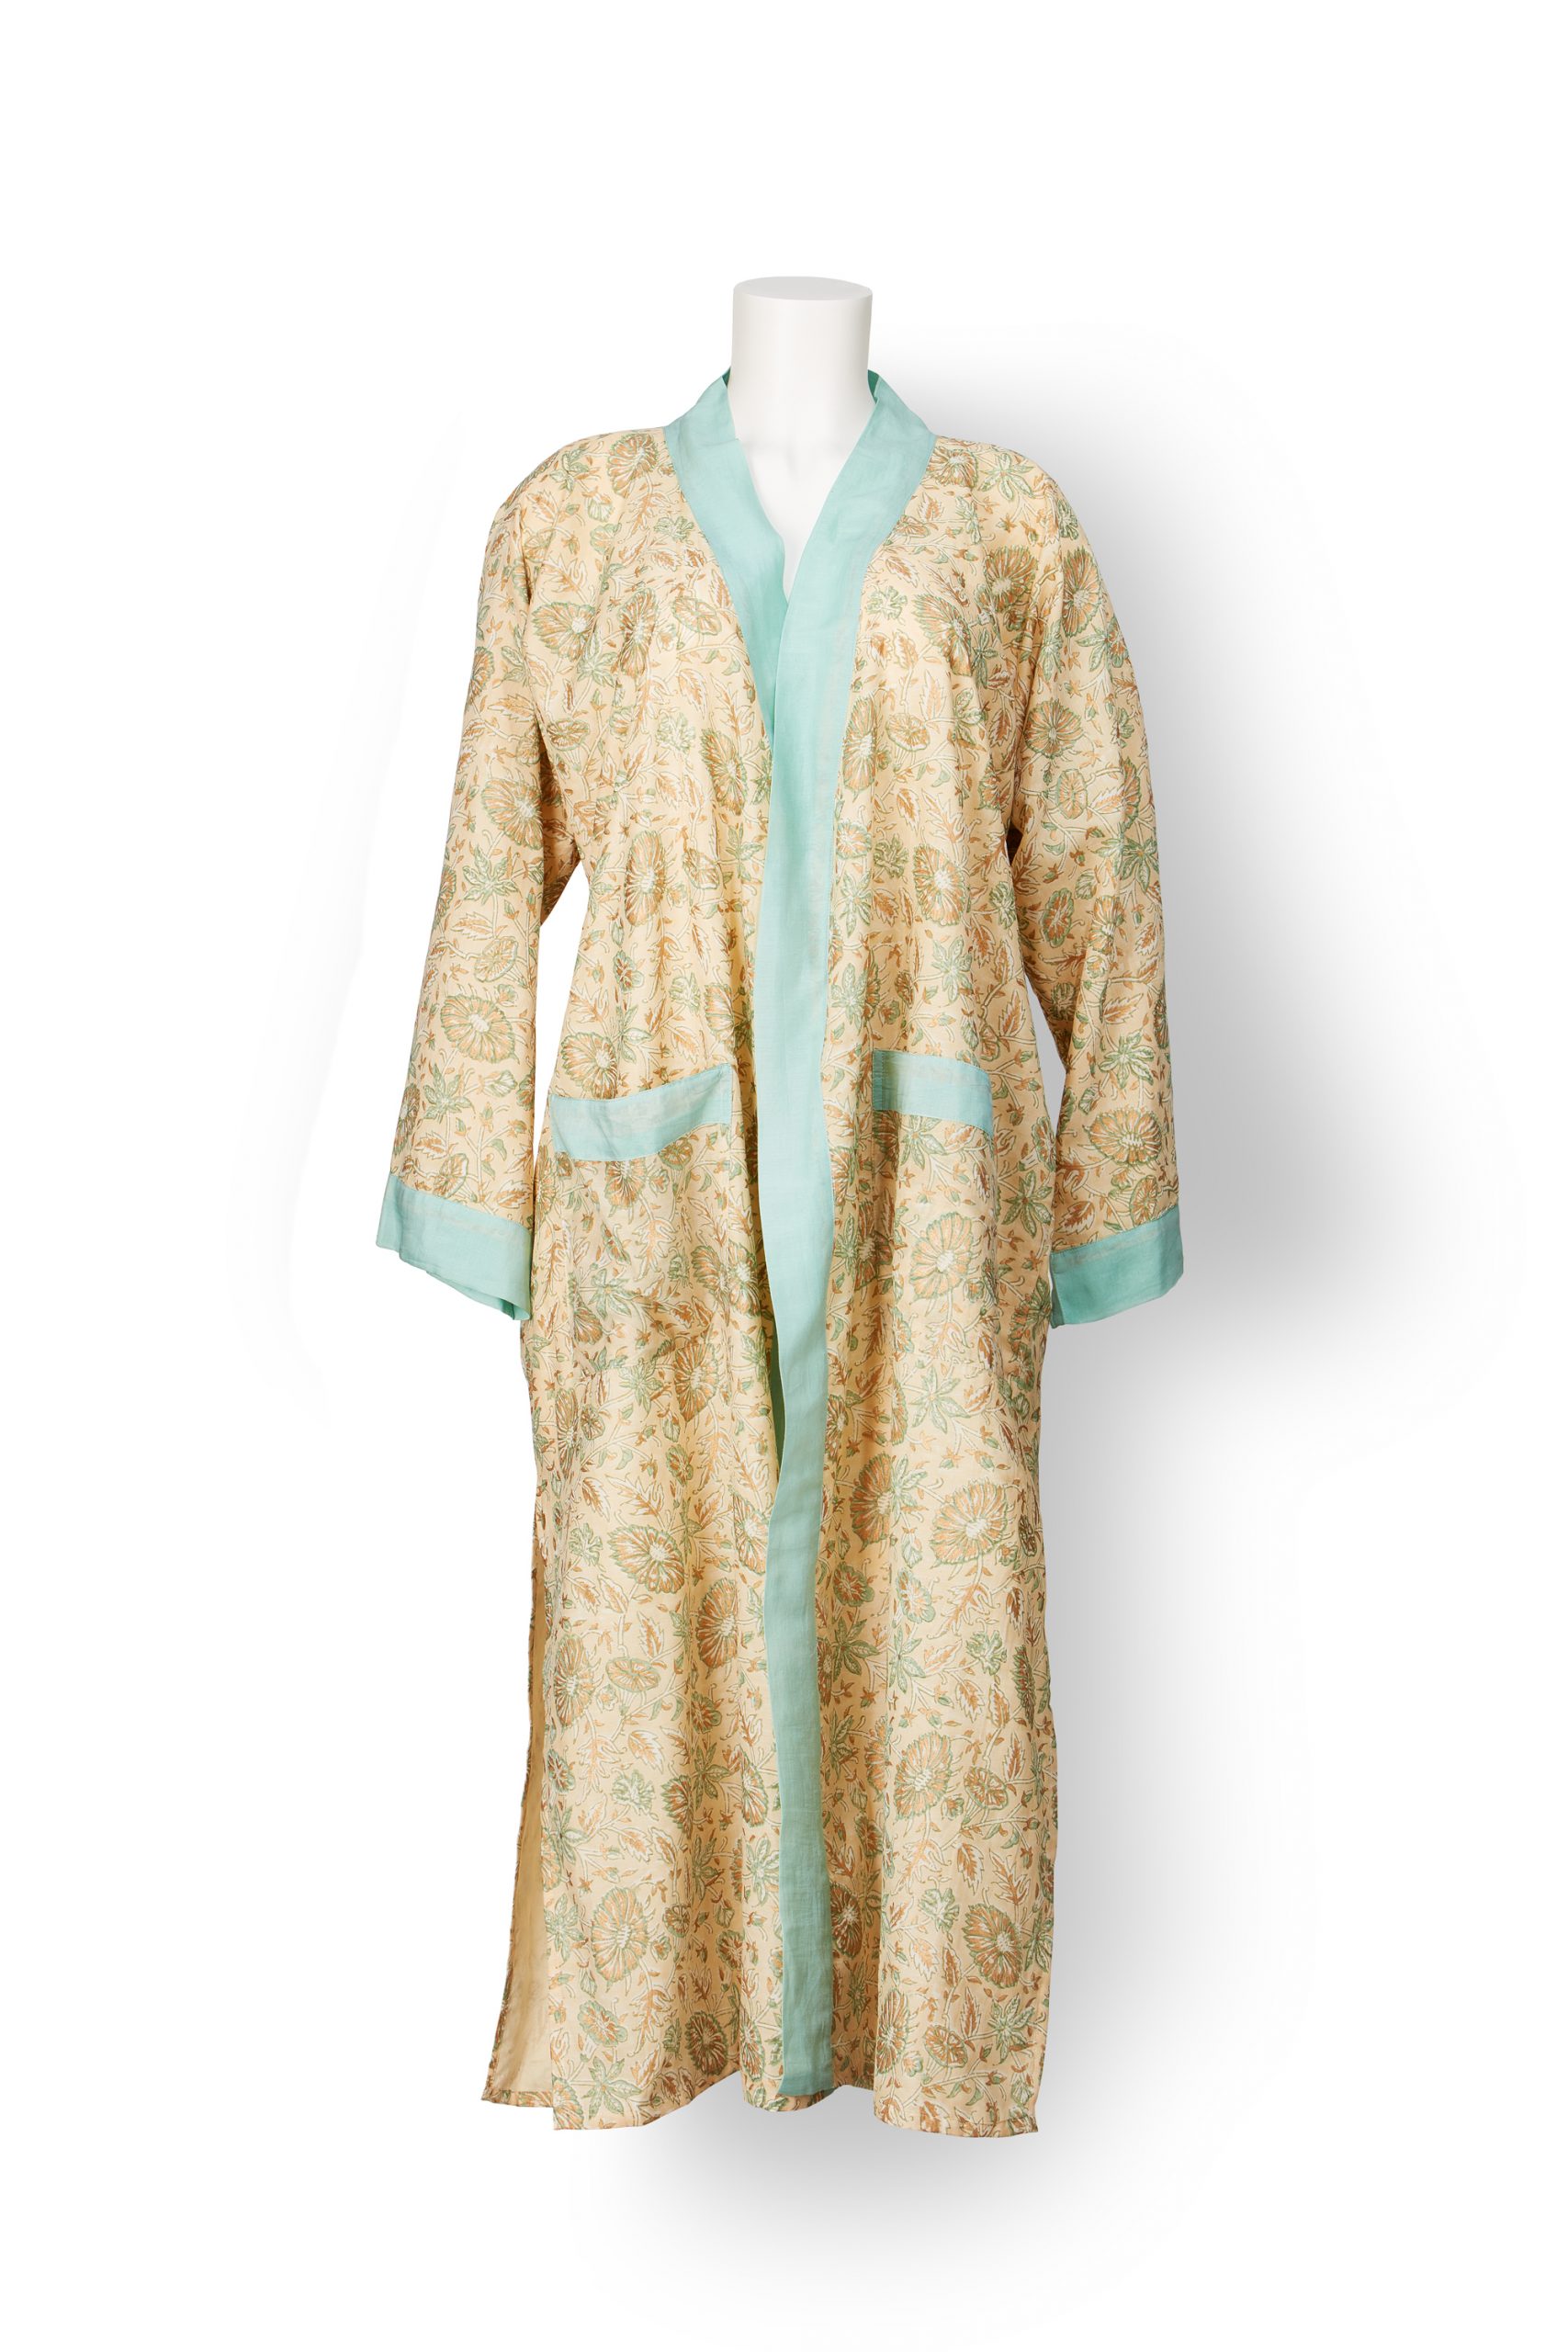 Kimono Silk/Cotton – Beige, Seagreen & Gold | The Blockprint Tree